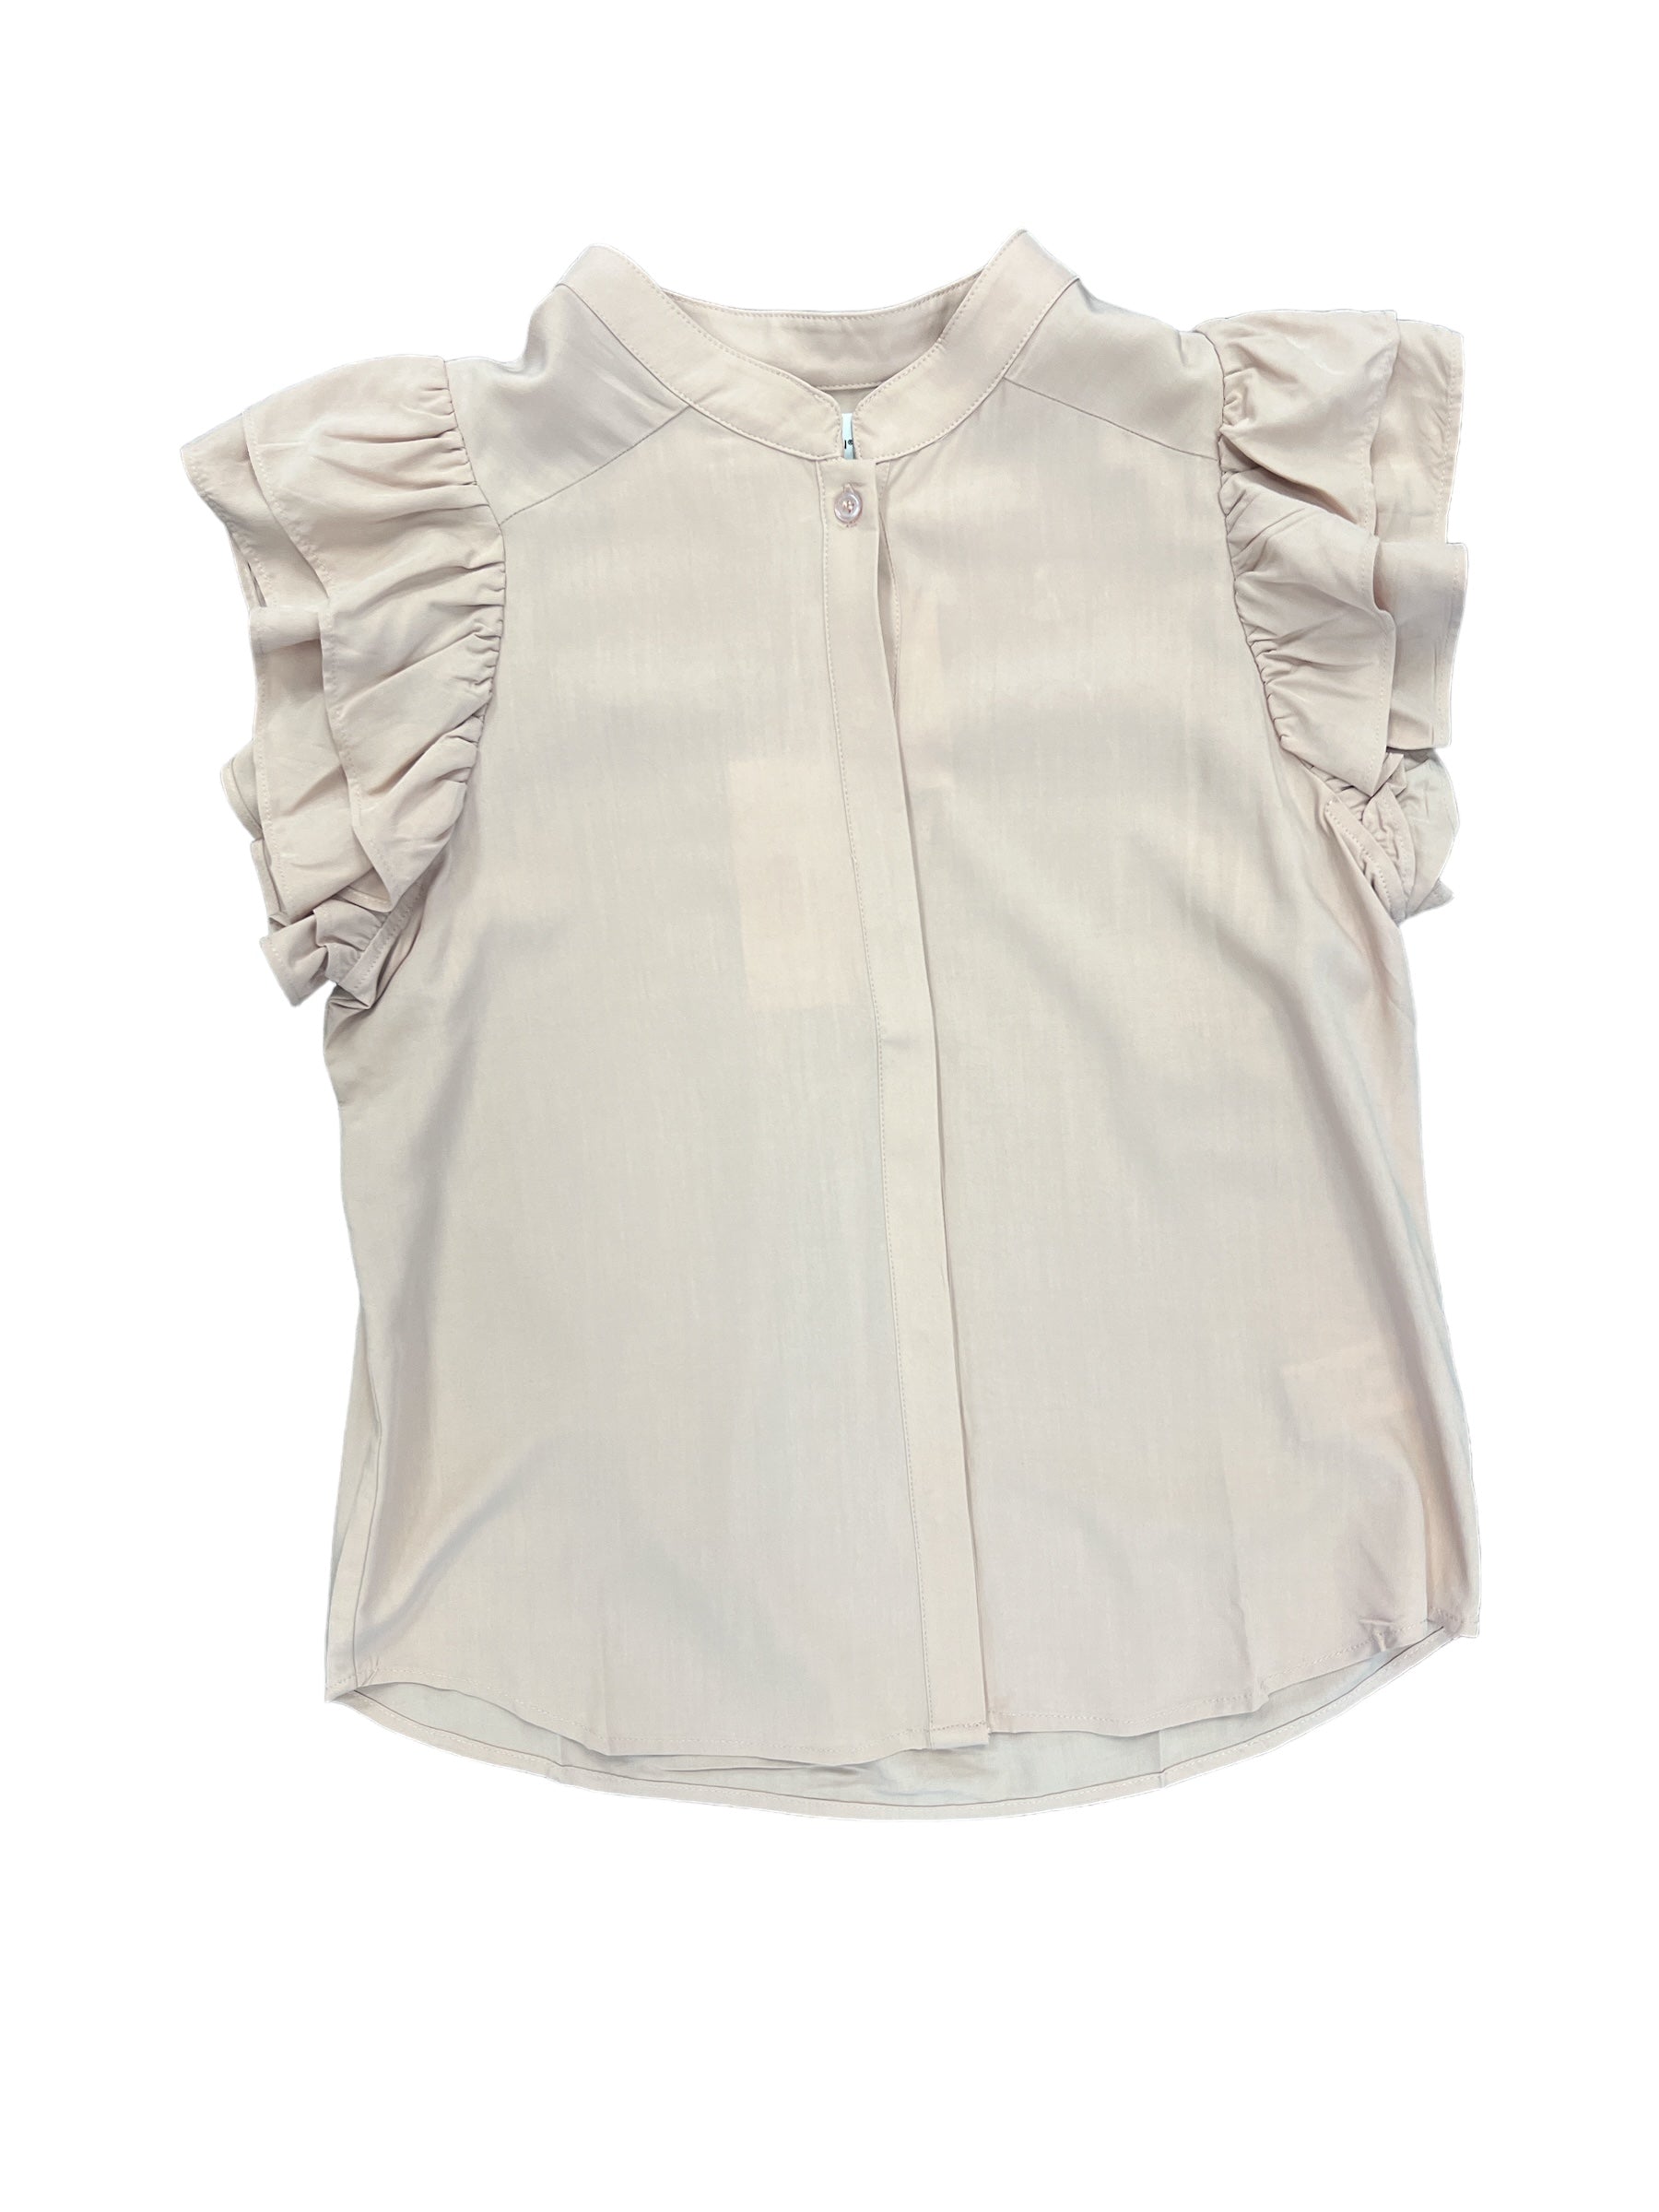 Marlie Petal Sleeve Shirt-130 Dressy Tops & Blouses-Dear John-Simply Stylish Boutique | Women’s & Kid’s Fashion | Paducah, KY